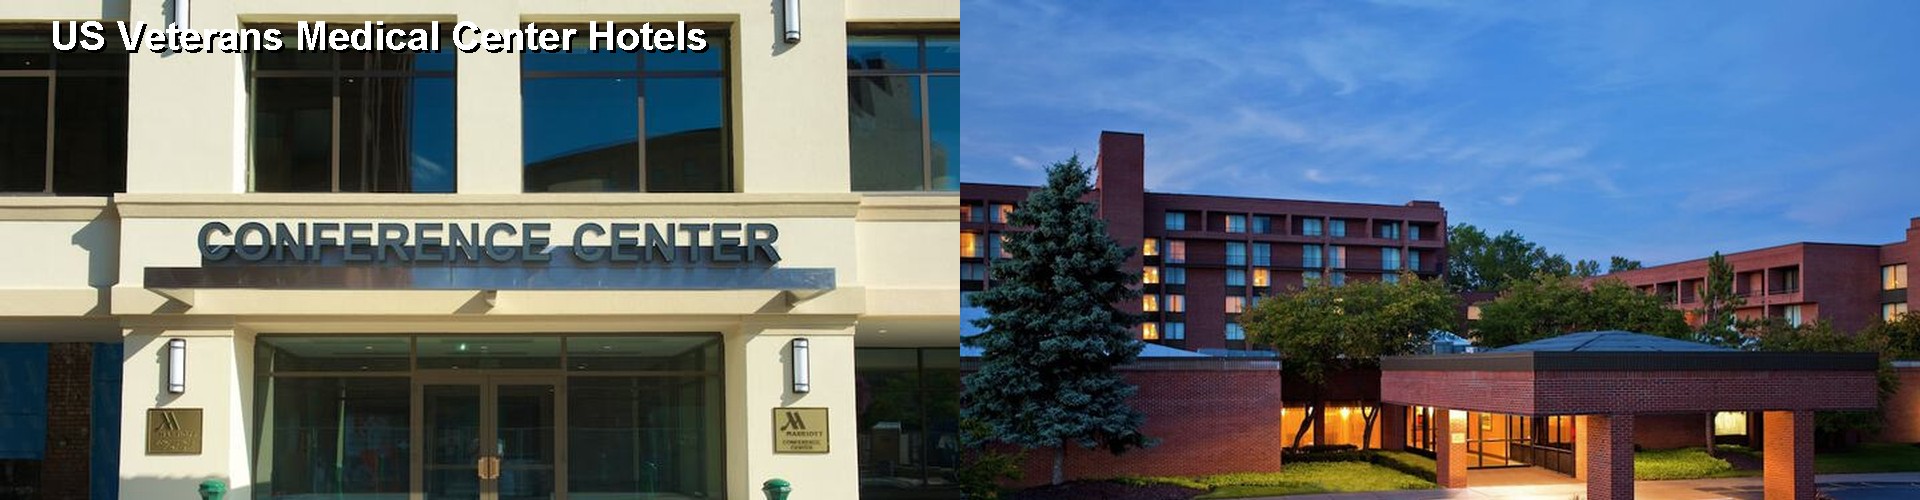 5 Best Hotels near US Veterans Medical Center